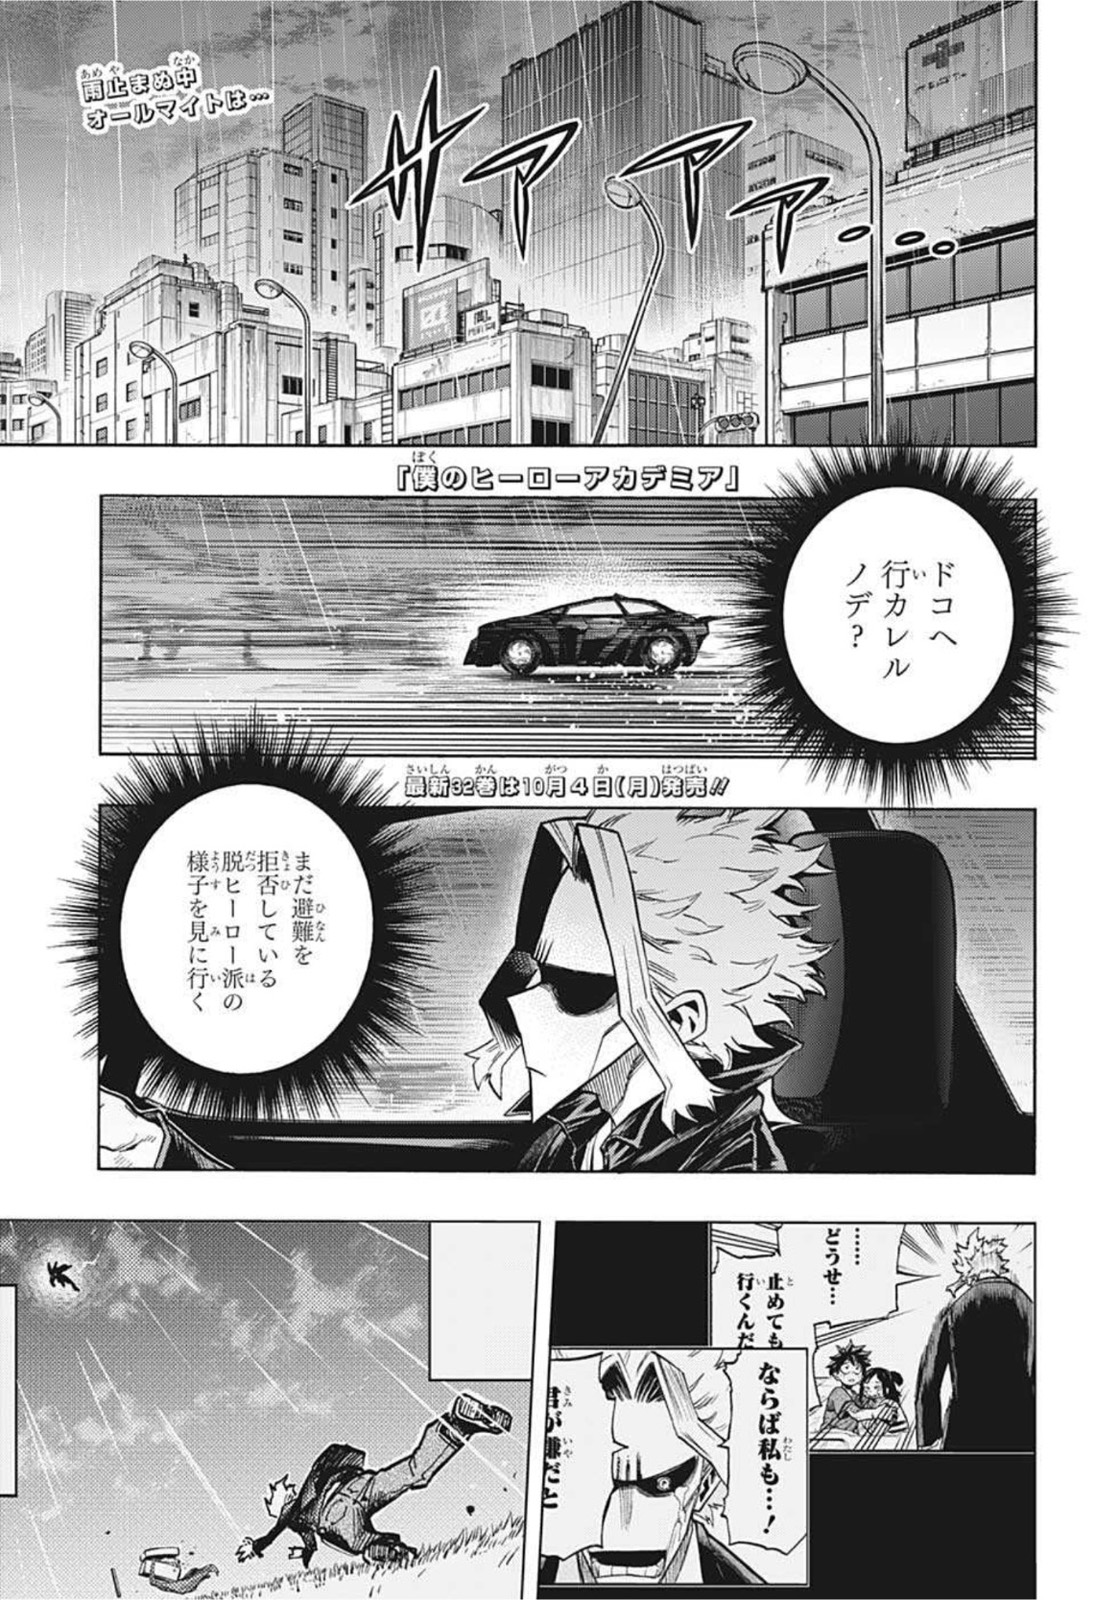 Boku no Hero Academia - Chapter 326 - Page 1